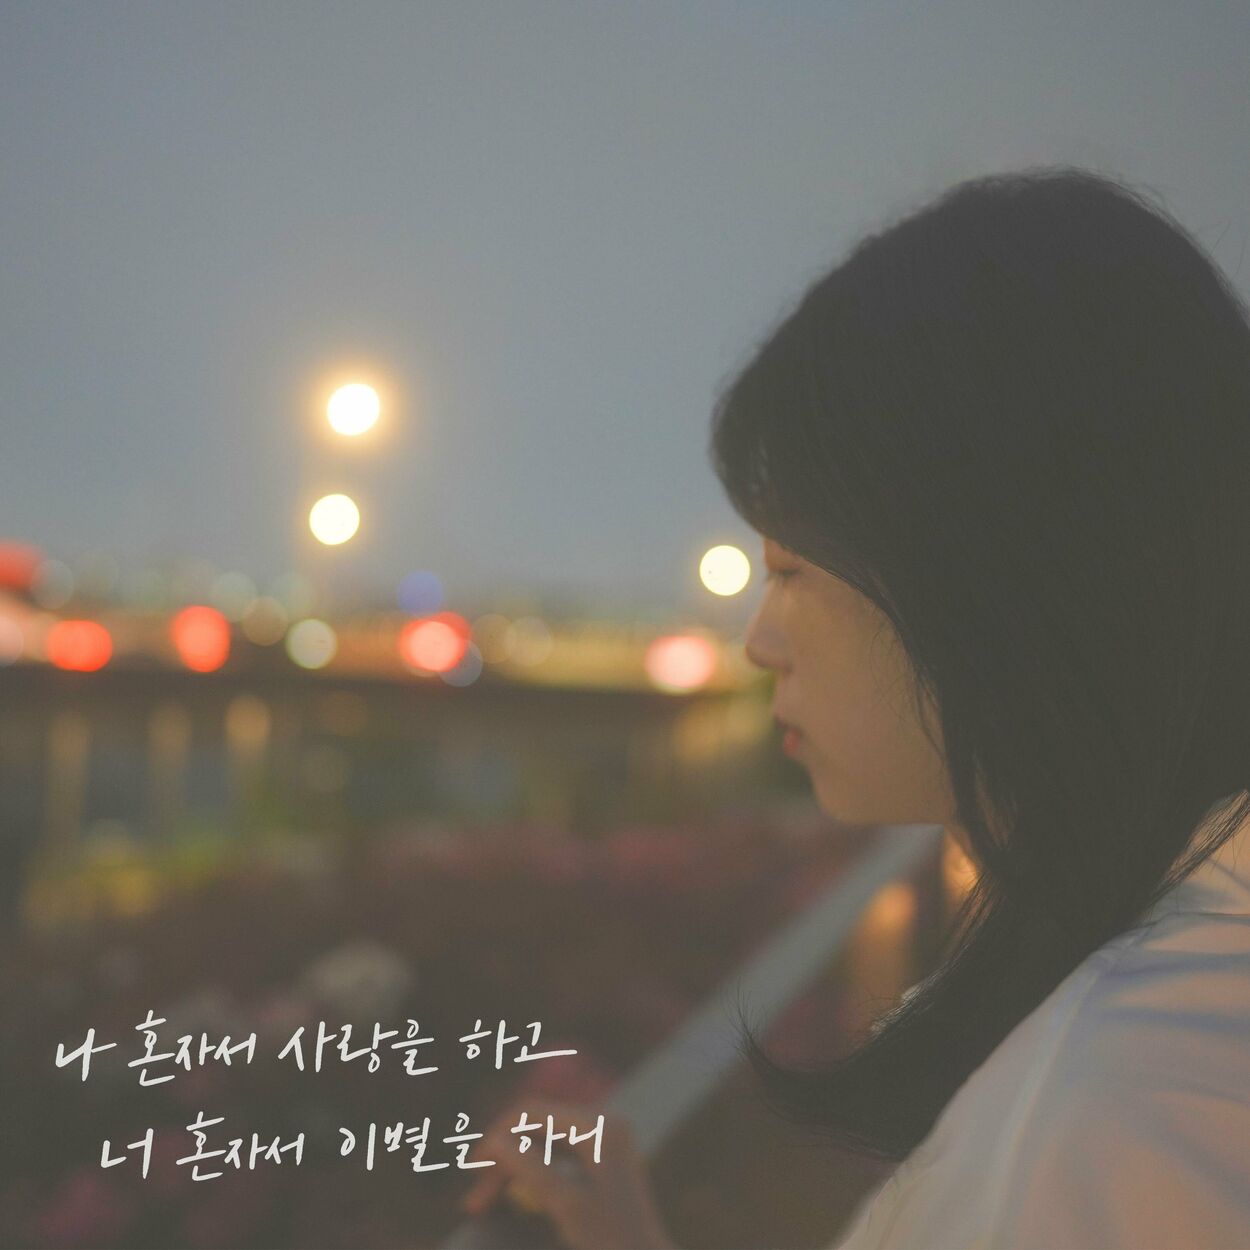 Nam Hyun – Breaking Up On My Own – Single